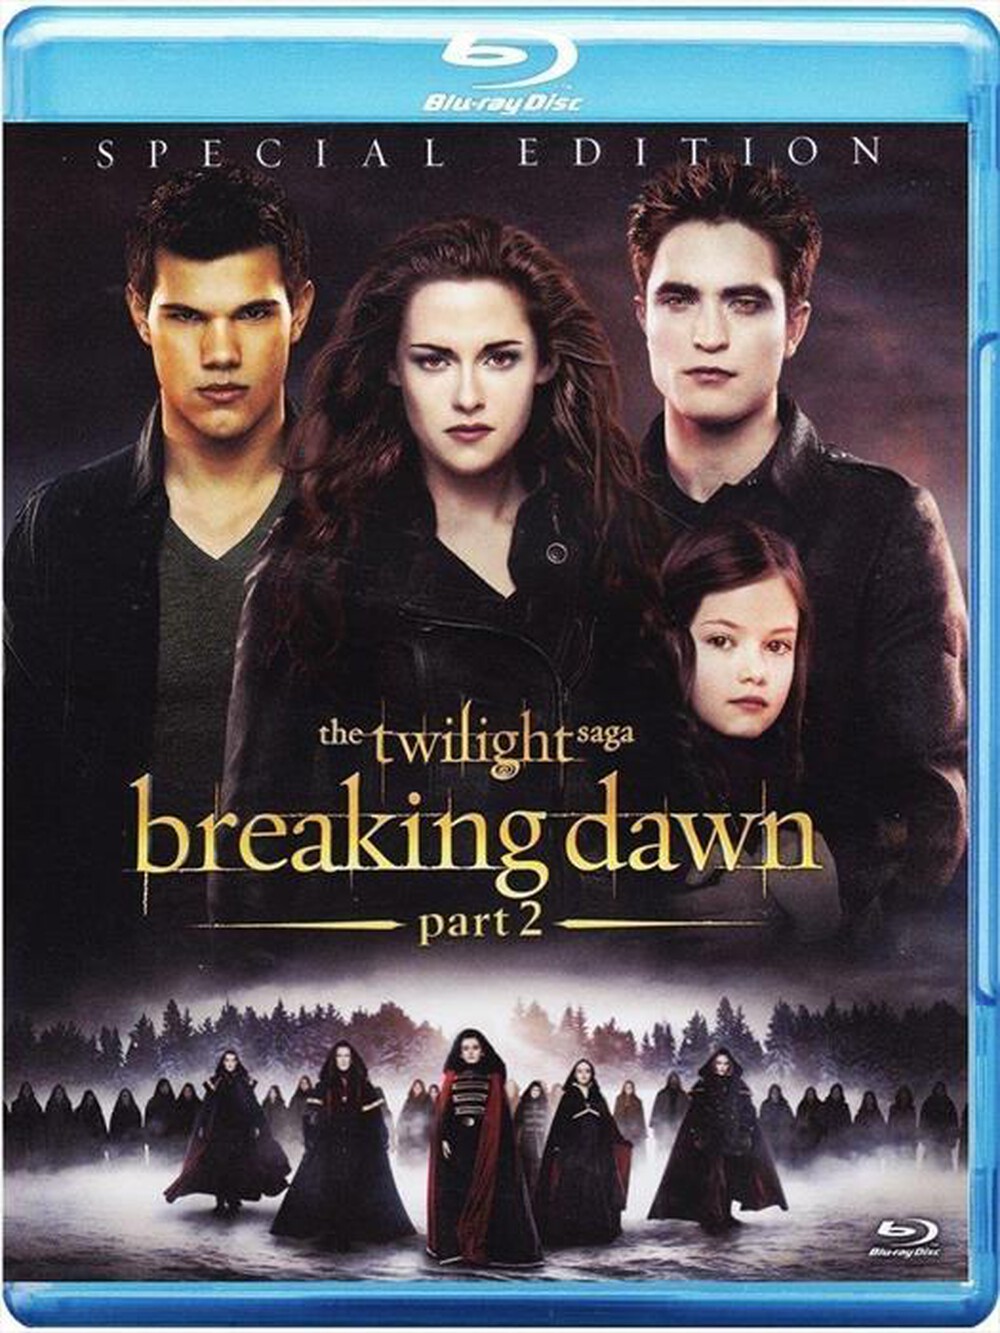 "EAGLE PICTURES - Breaking Dawn - Parte 2 - The Twilight Saga"